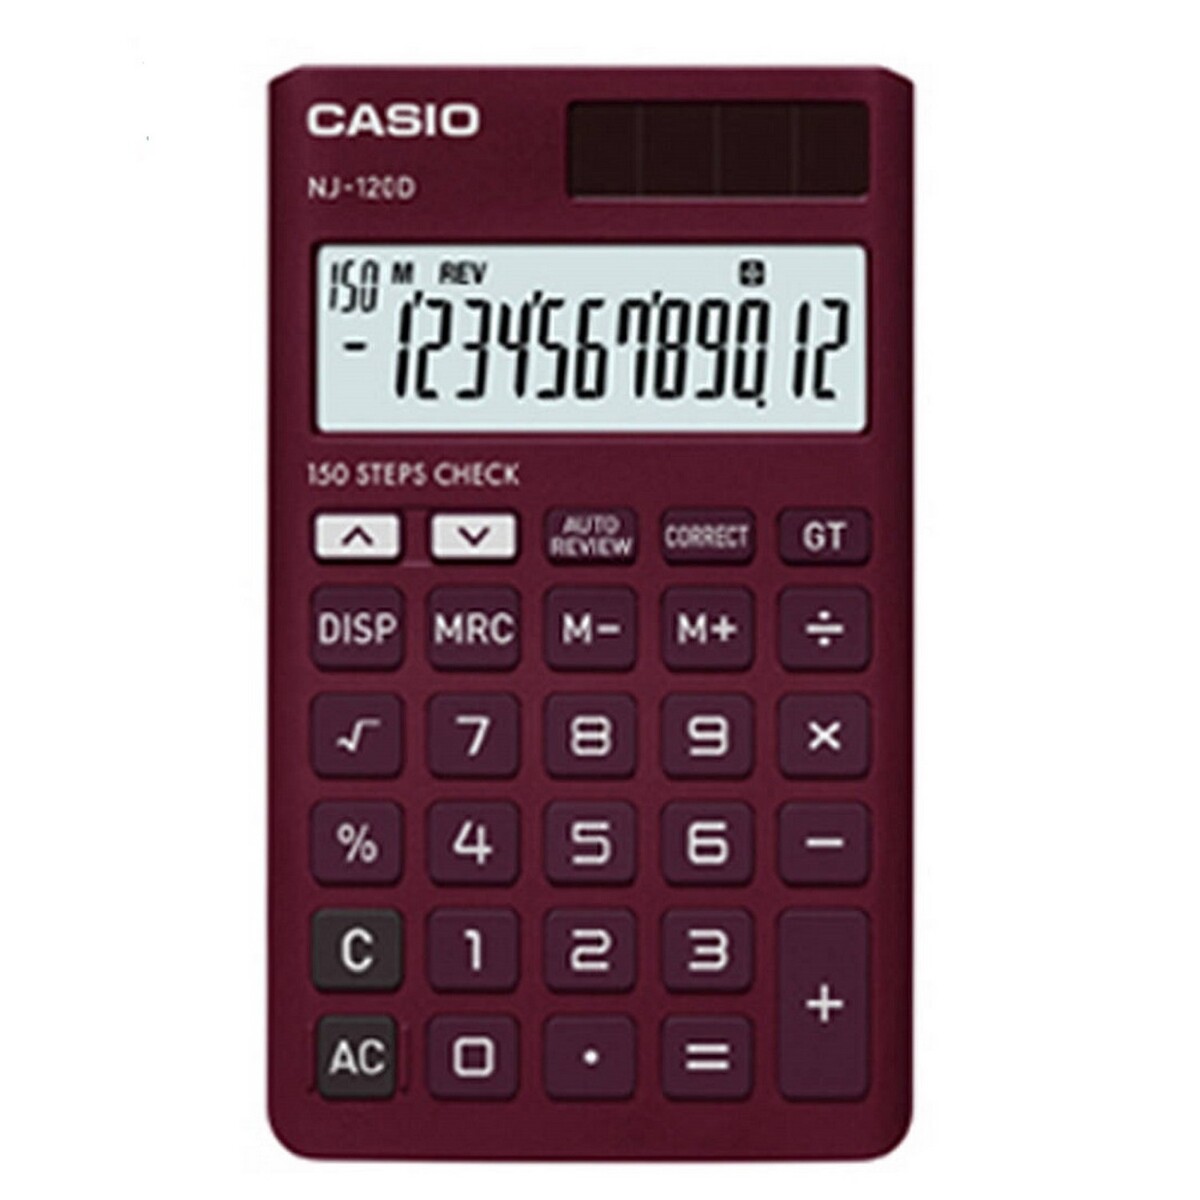 Casio NJ-120D-RD Basic Calculator